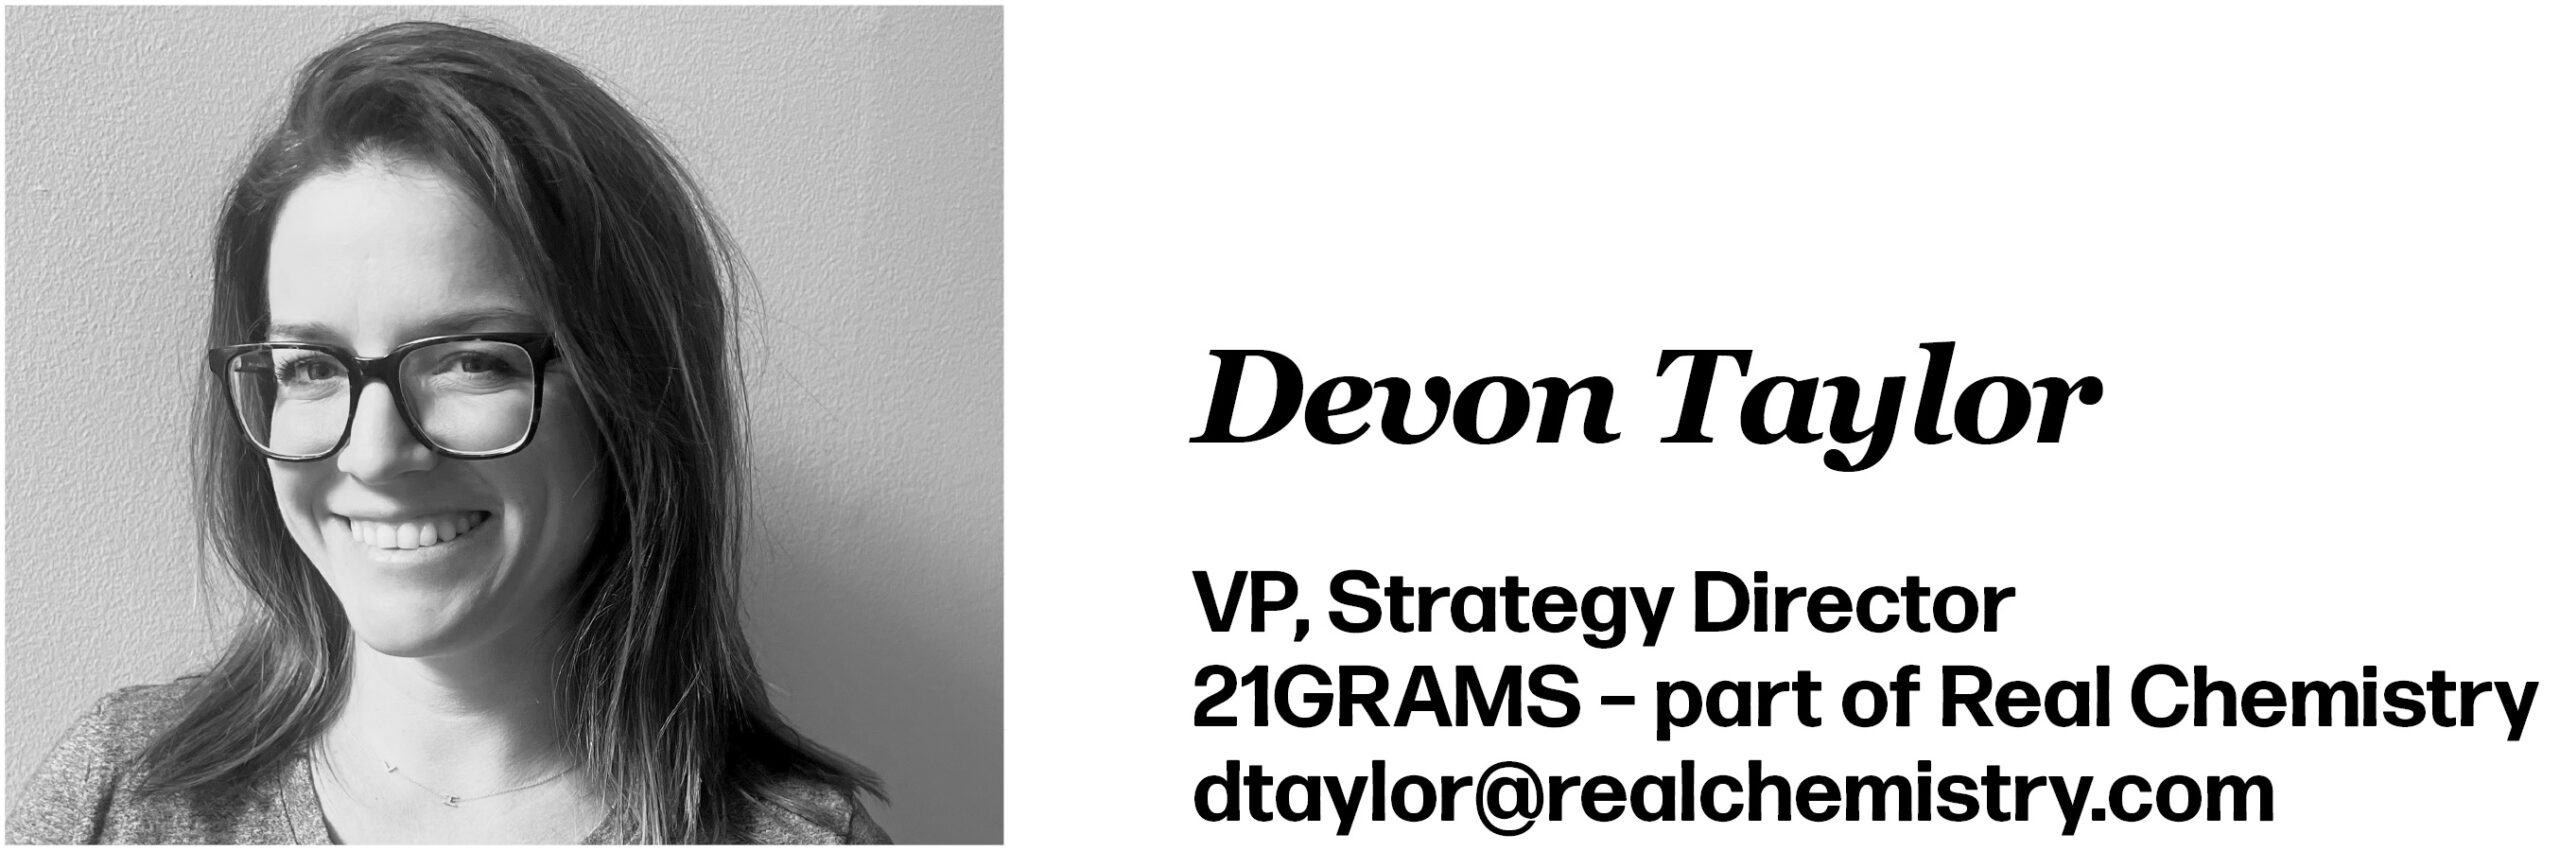 Devon Taylor VP, Strategy Director 21GRAMS – part of Real Chemistry dtaylor@realchemistry.com